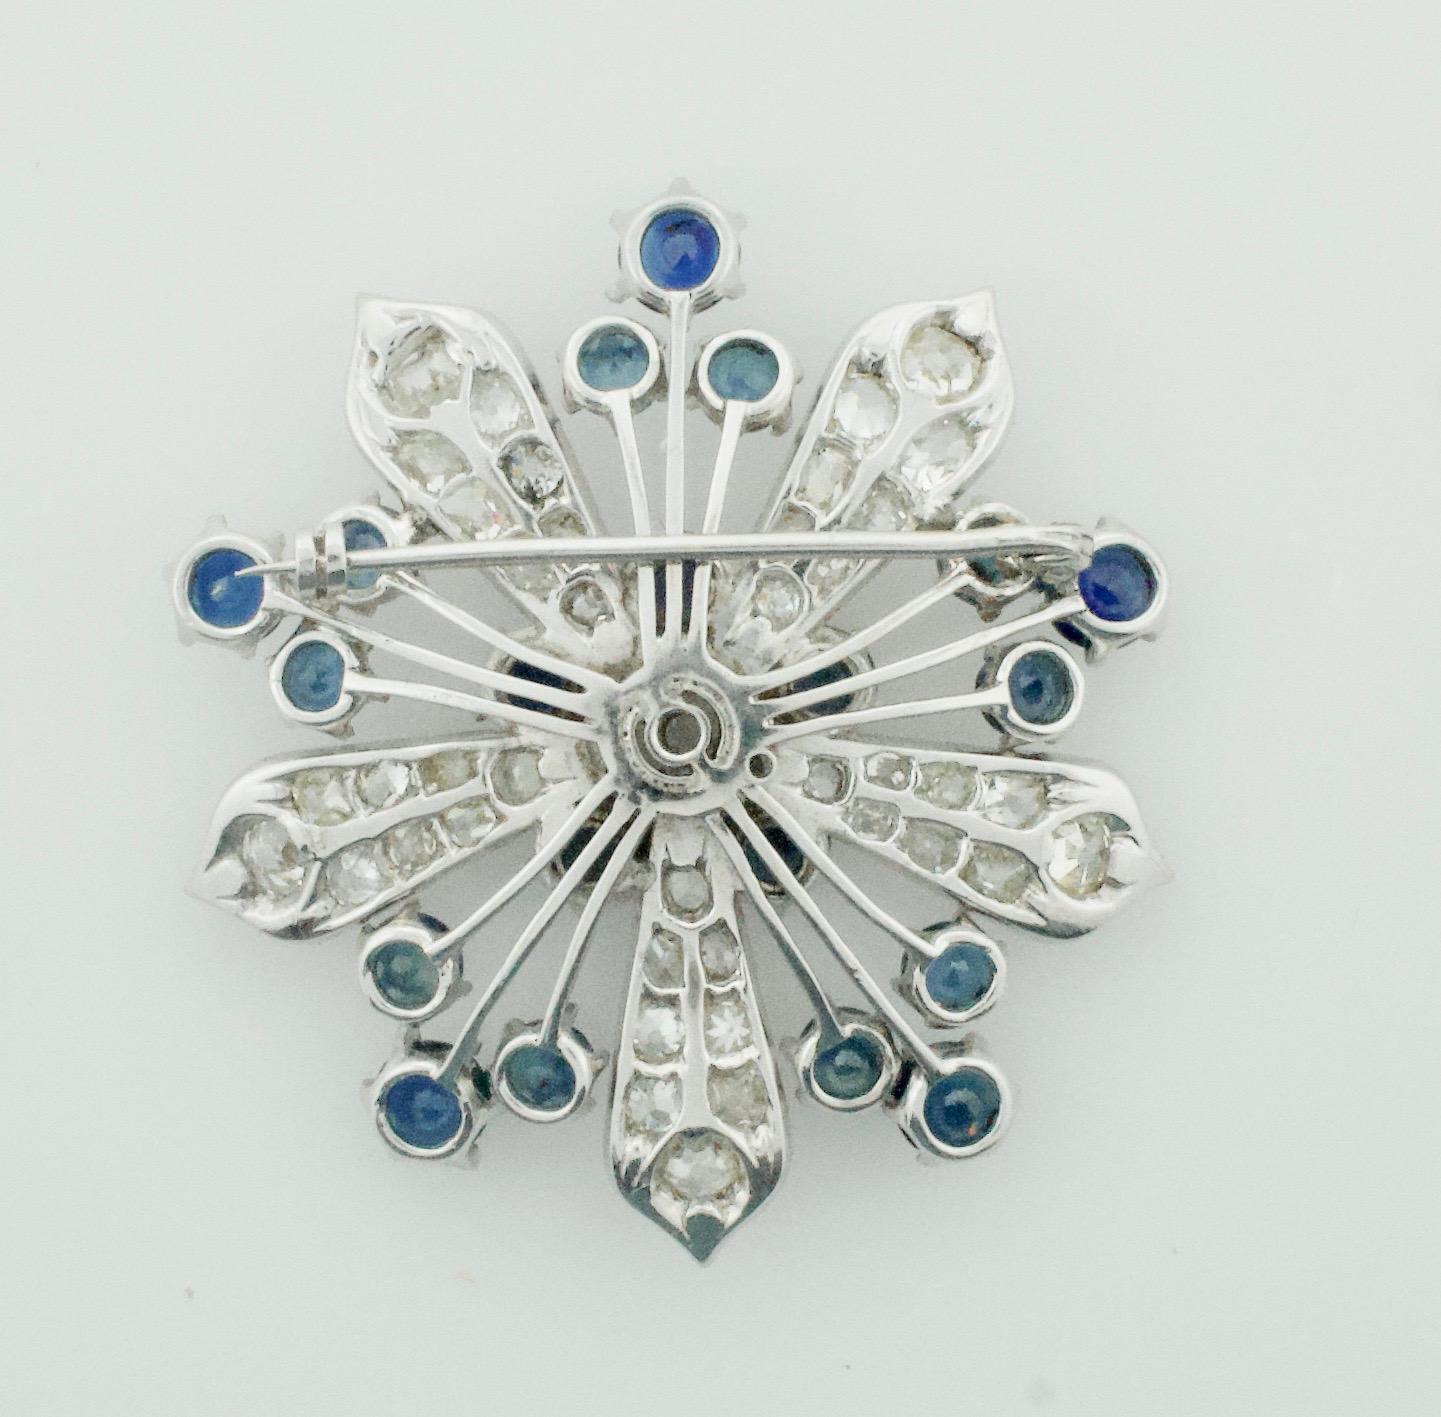 Round Cut Platinum Diamond and Sapphire Brooch, Necklace circa 1920s 6.85 Carat